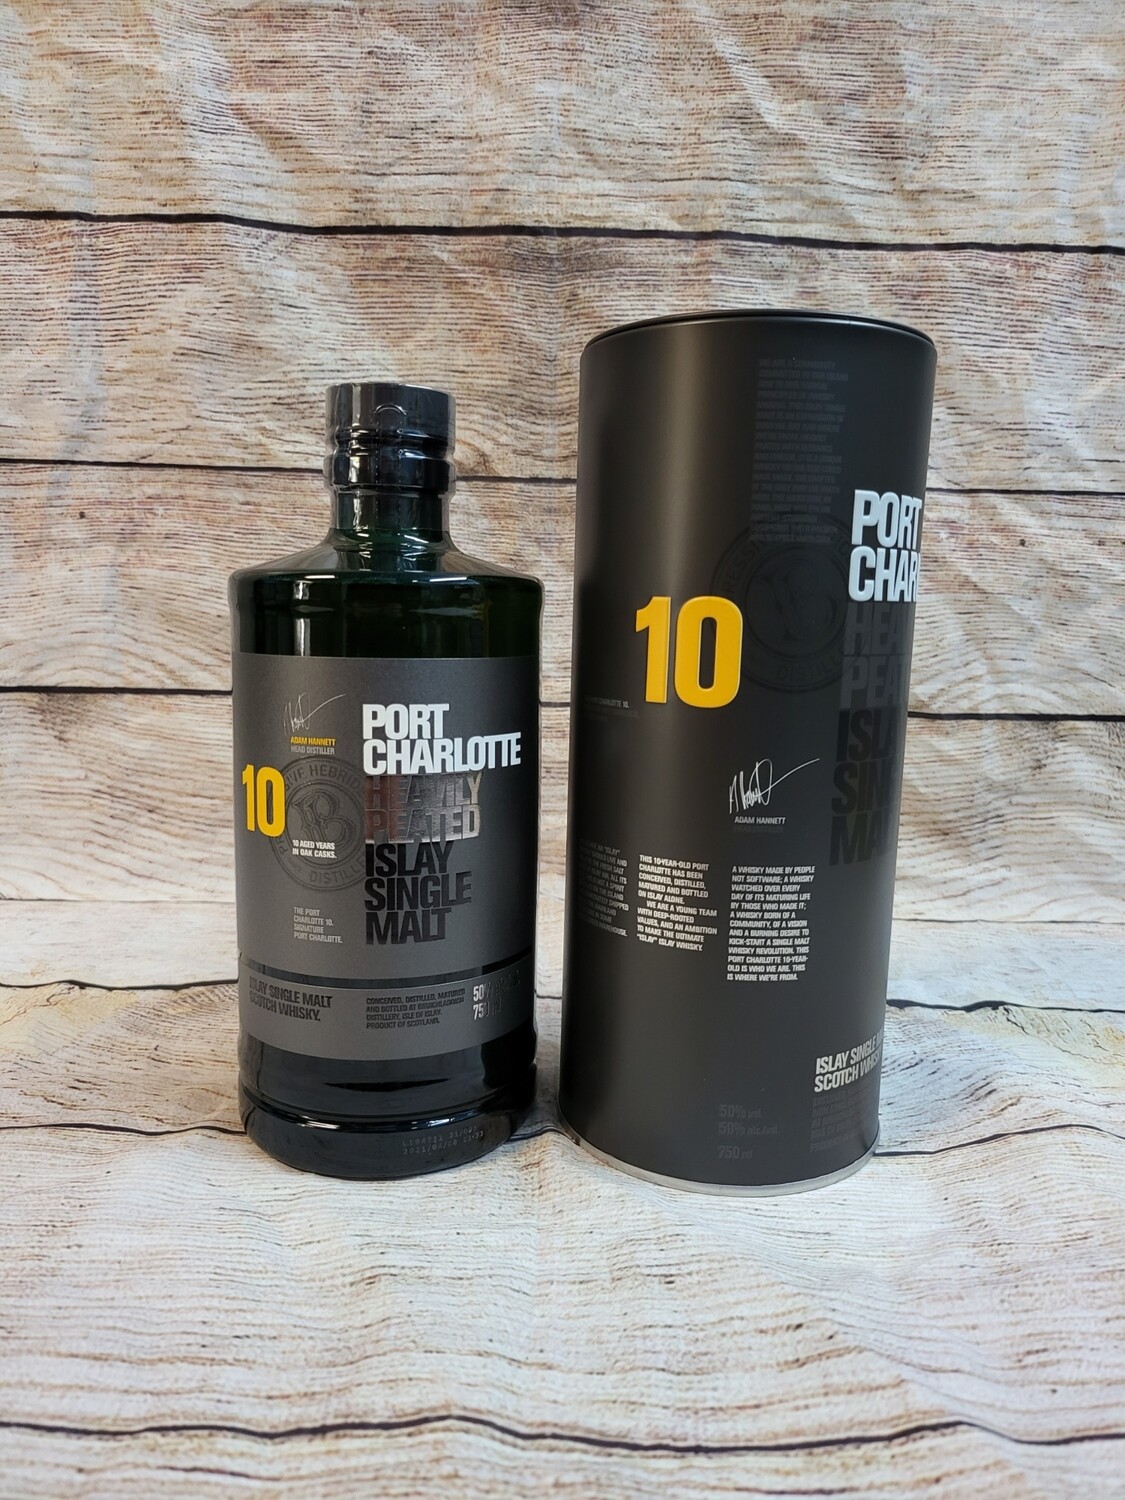 Bruichladdich Islay Single Malt Scotch Whisky Port Charlottle Heavily Peated 10year 750ml